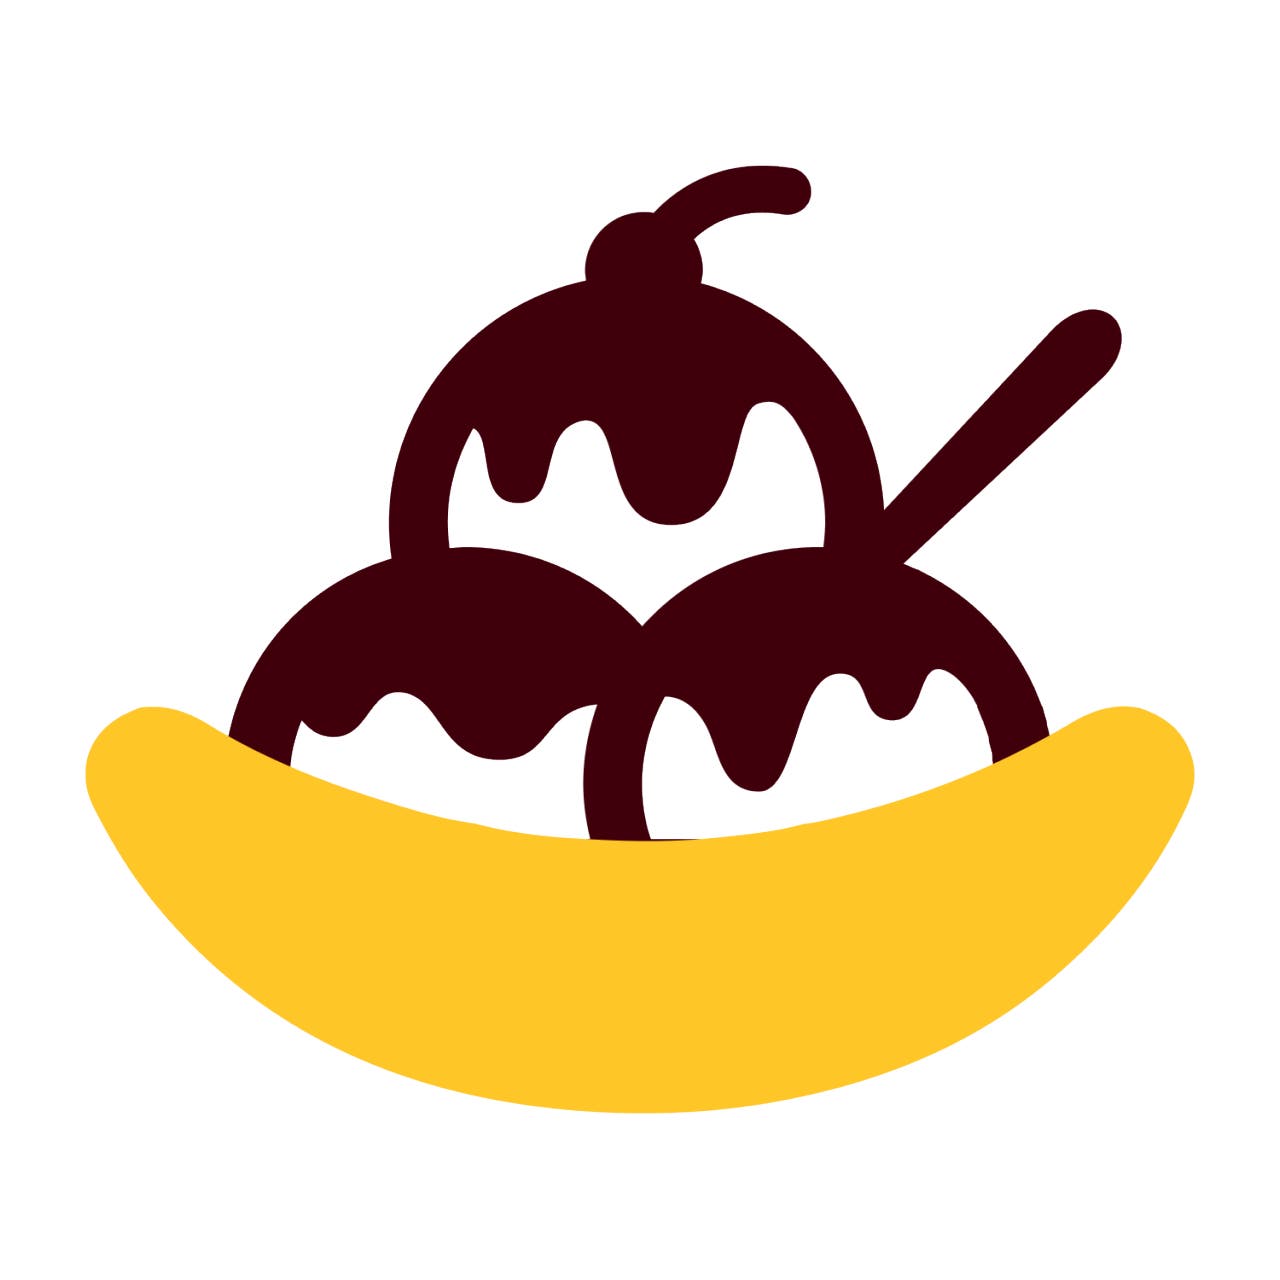 banana split illustration